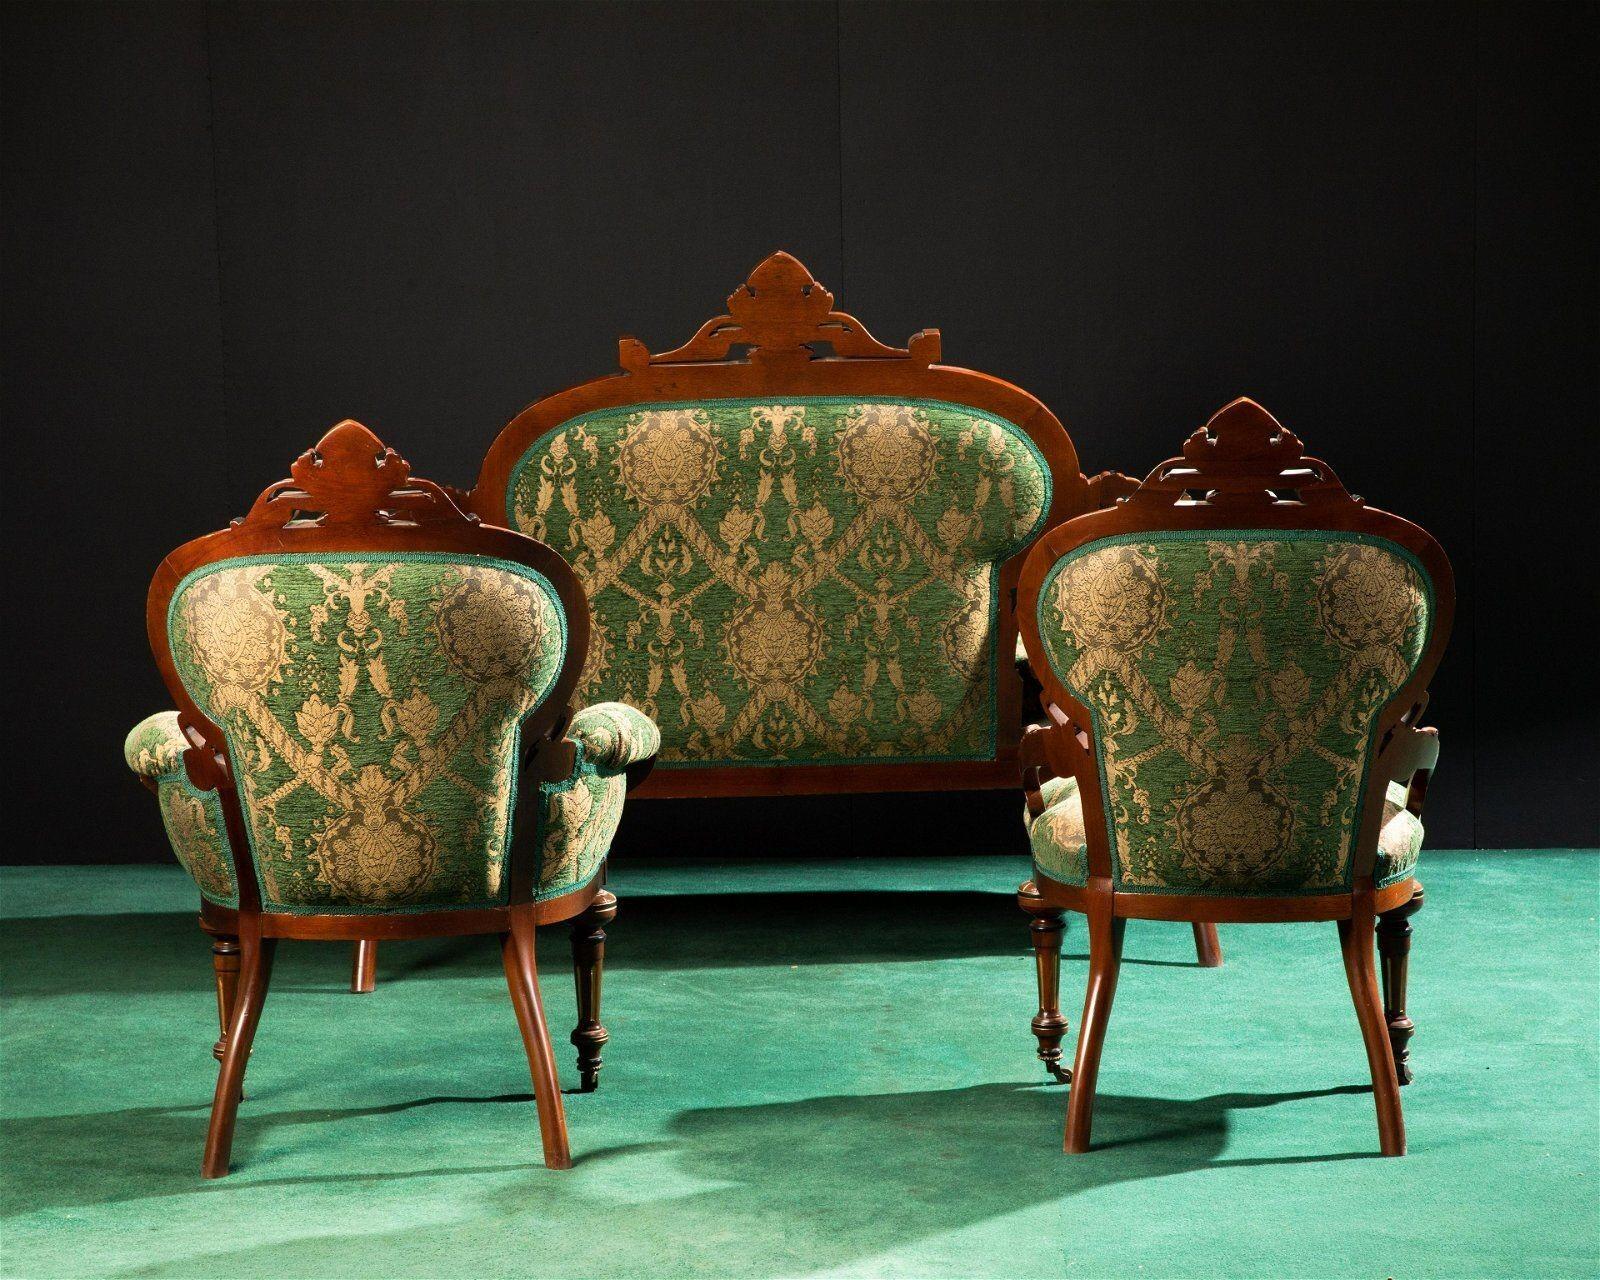 Amerikanisches spätviktorianisches Renaissance-Revival-Sofa & Stuhl-Set (Spätes 19. Jahrhundert) im Angebot